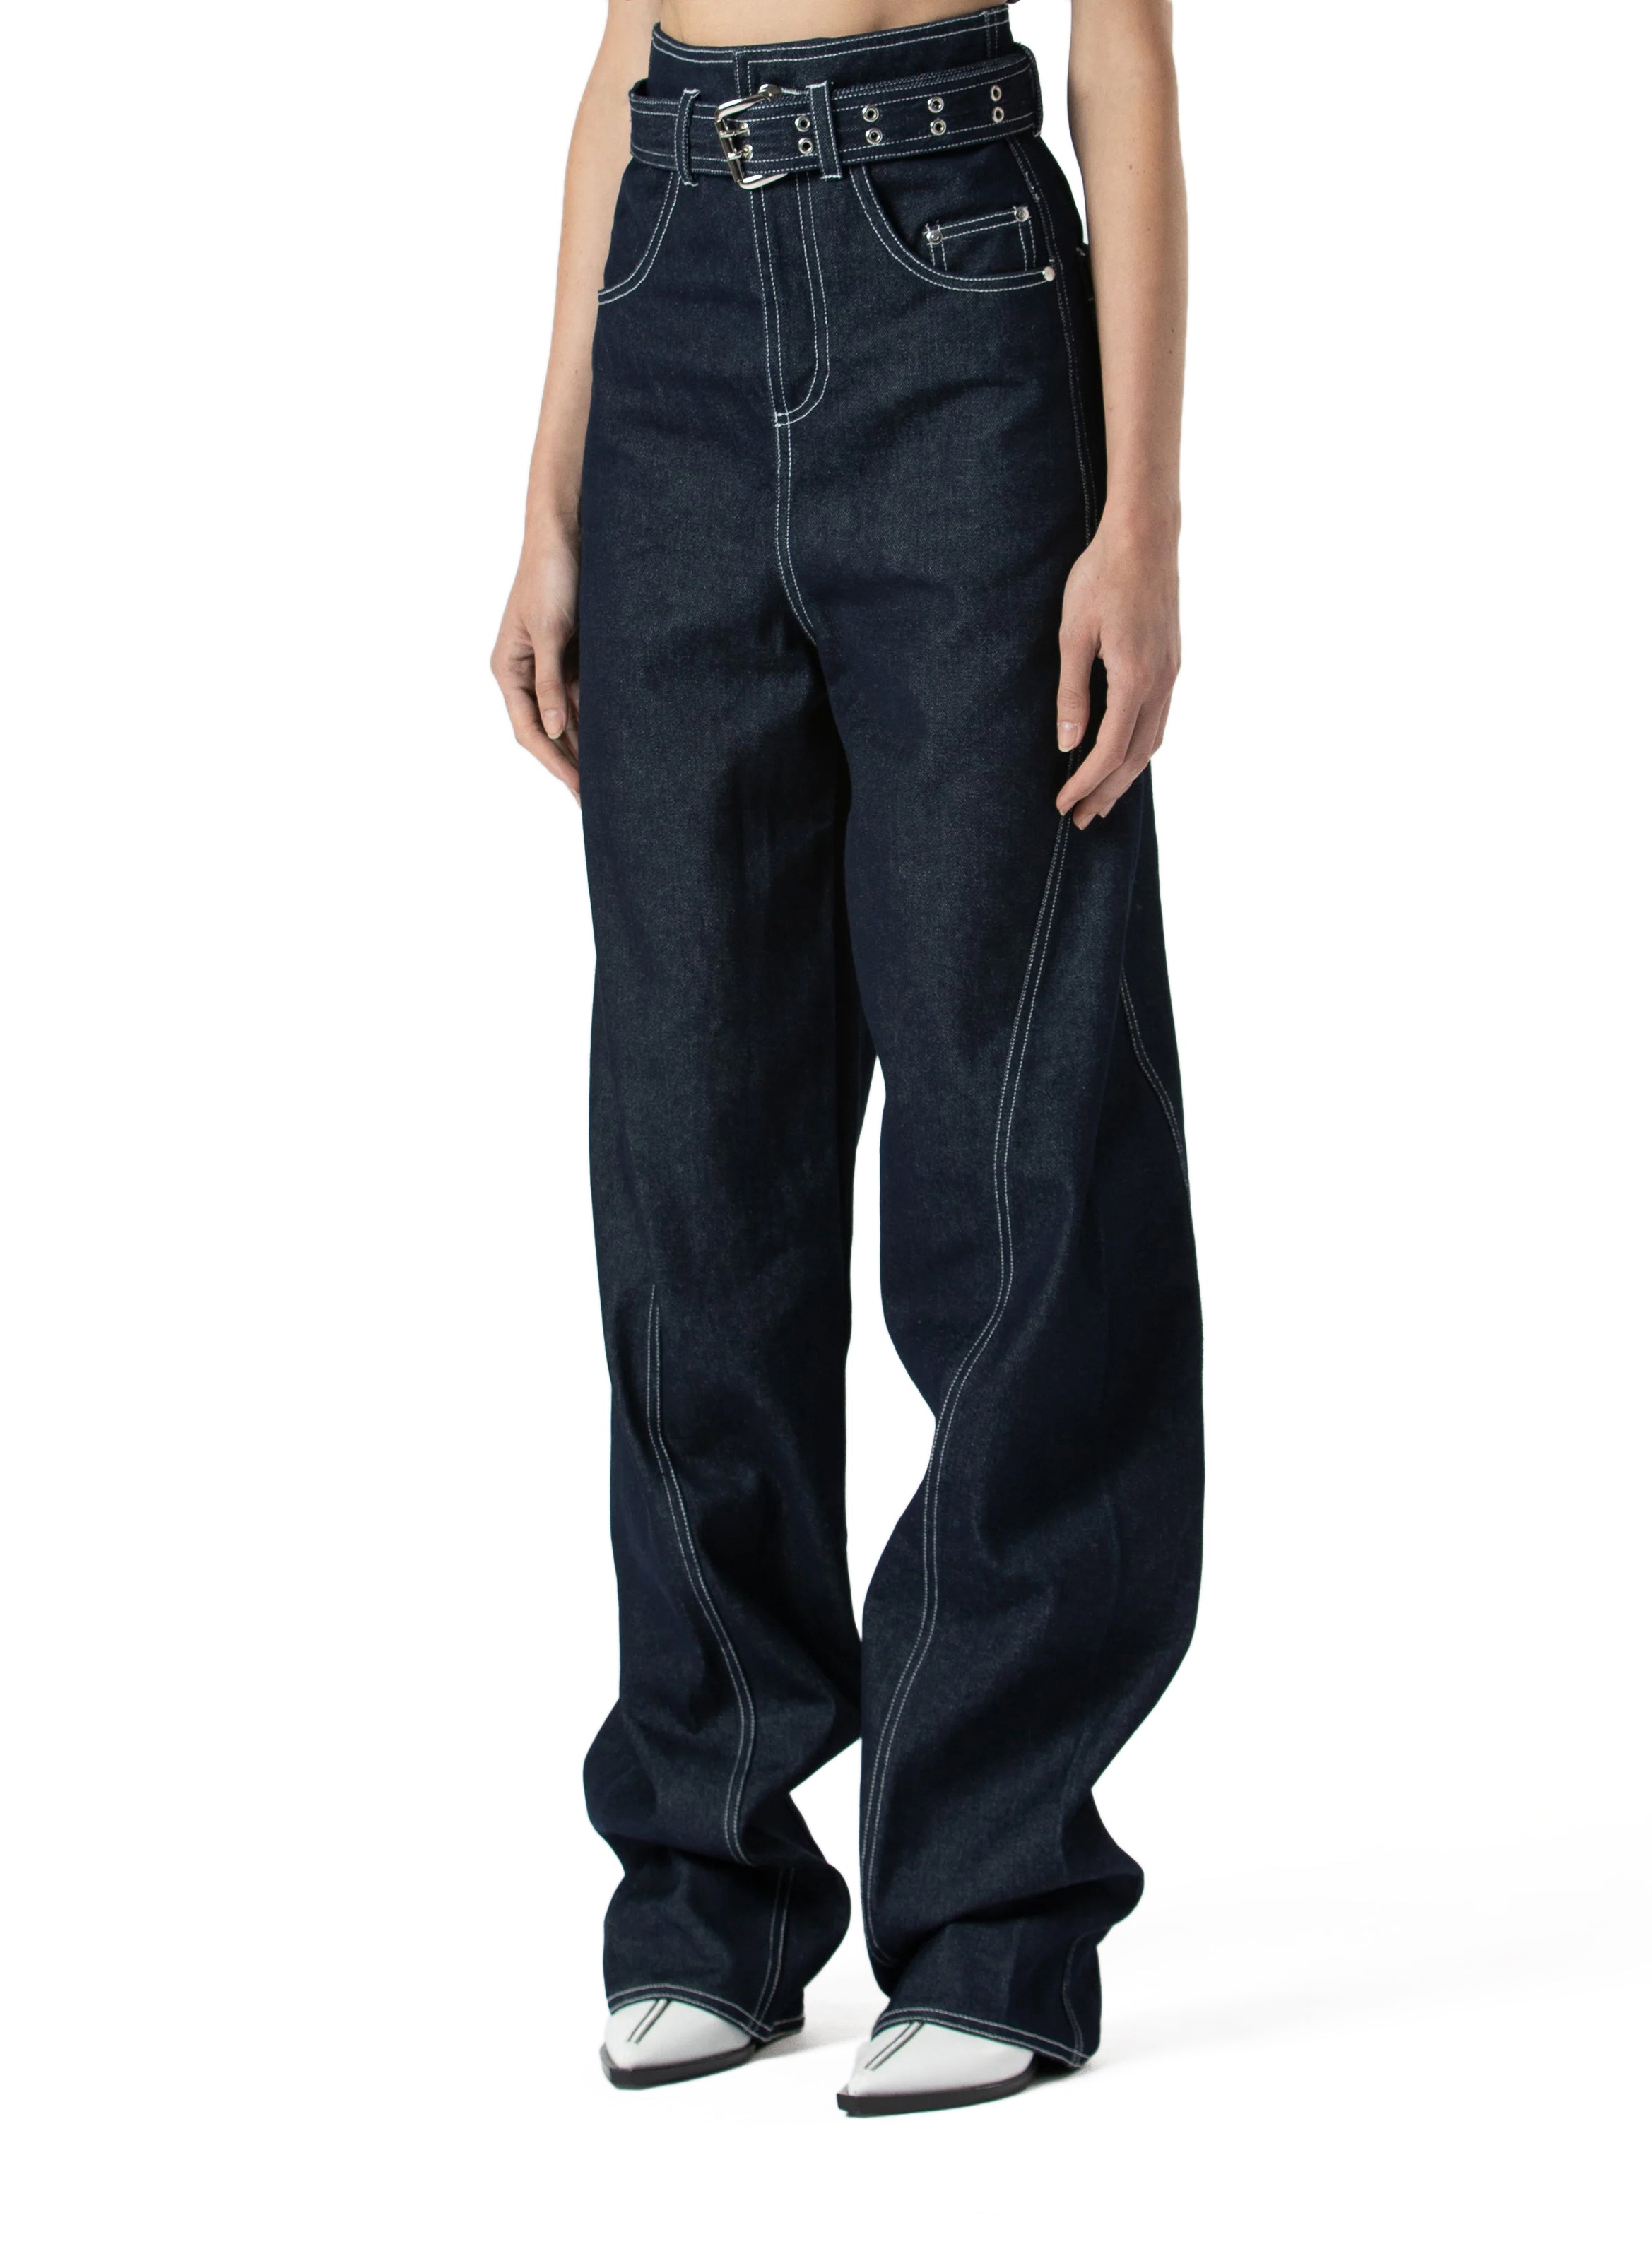 Form Jeans - Black Denim | High-rise | Organic Cotton | Kowtow United States